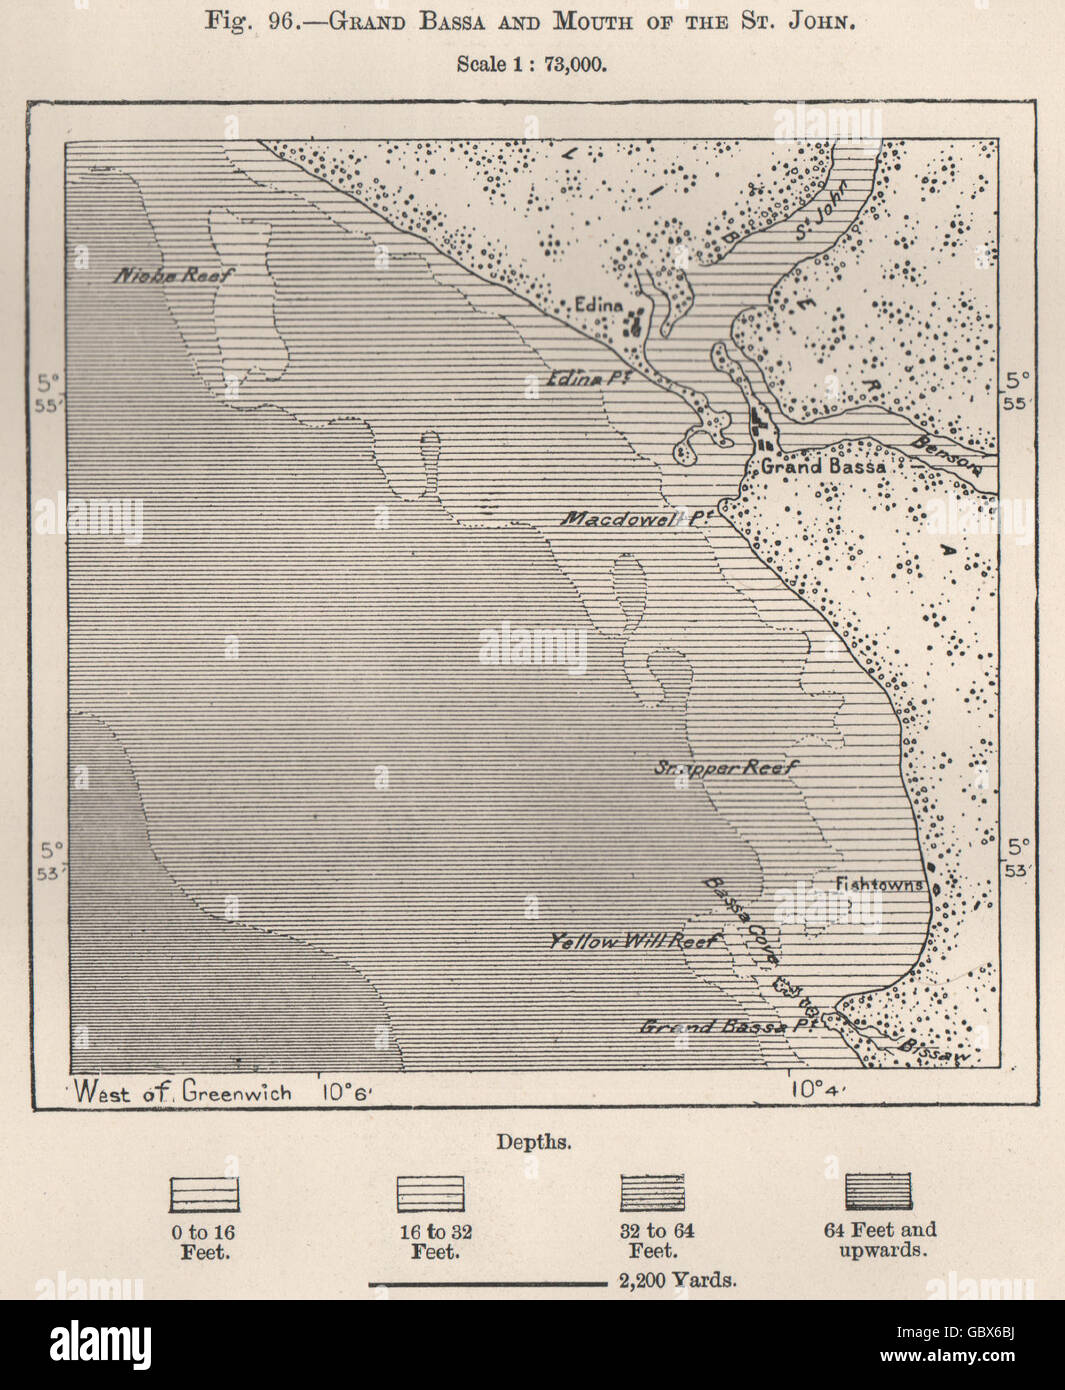 Grand Bassa (Buchanan) & mouth of the St. John. Liberia, 1885 antique map Stock Photo